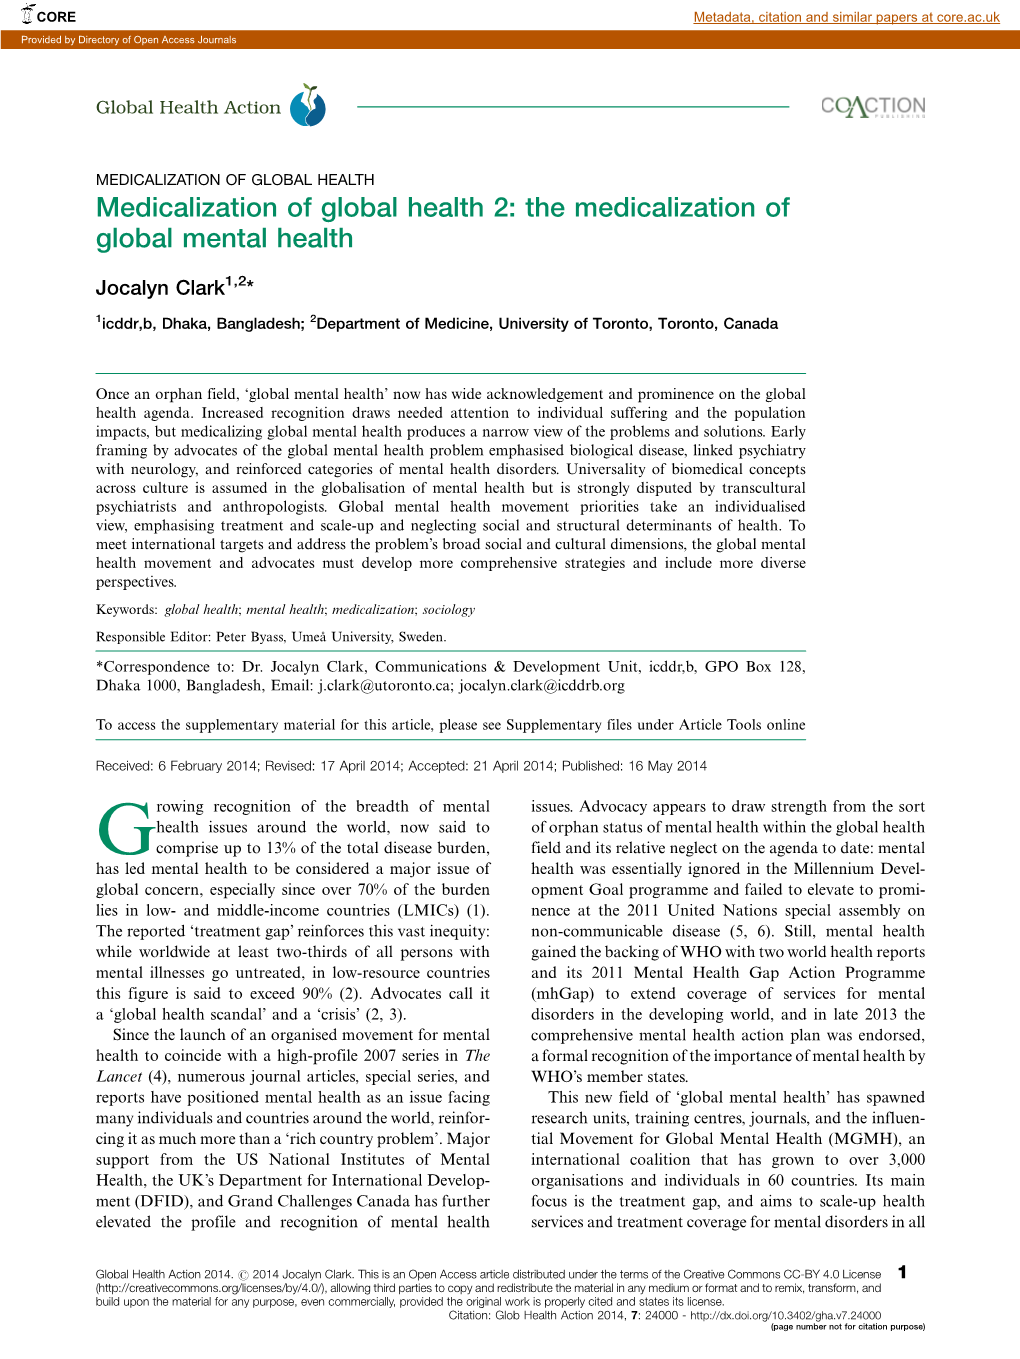 The Medicalization of Global Mental Health